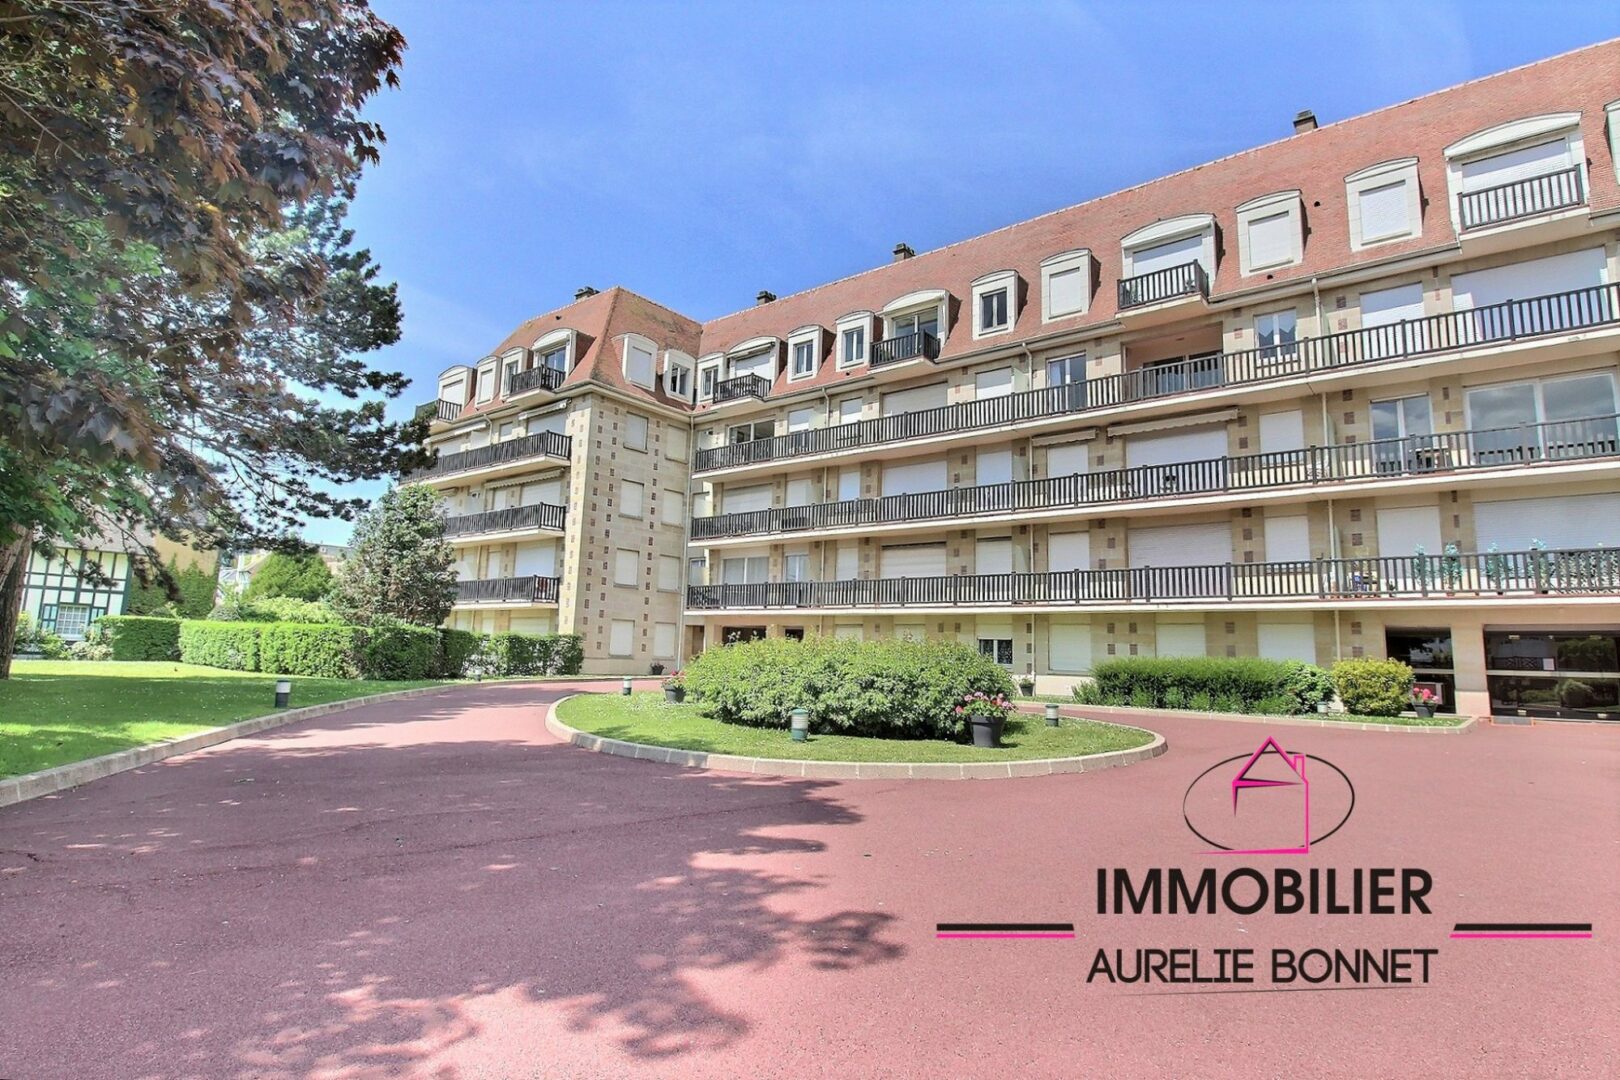 Acheter Aurélie BONNET Immobilier